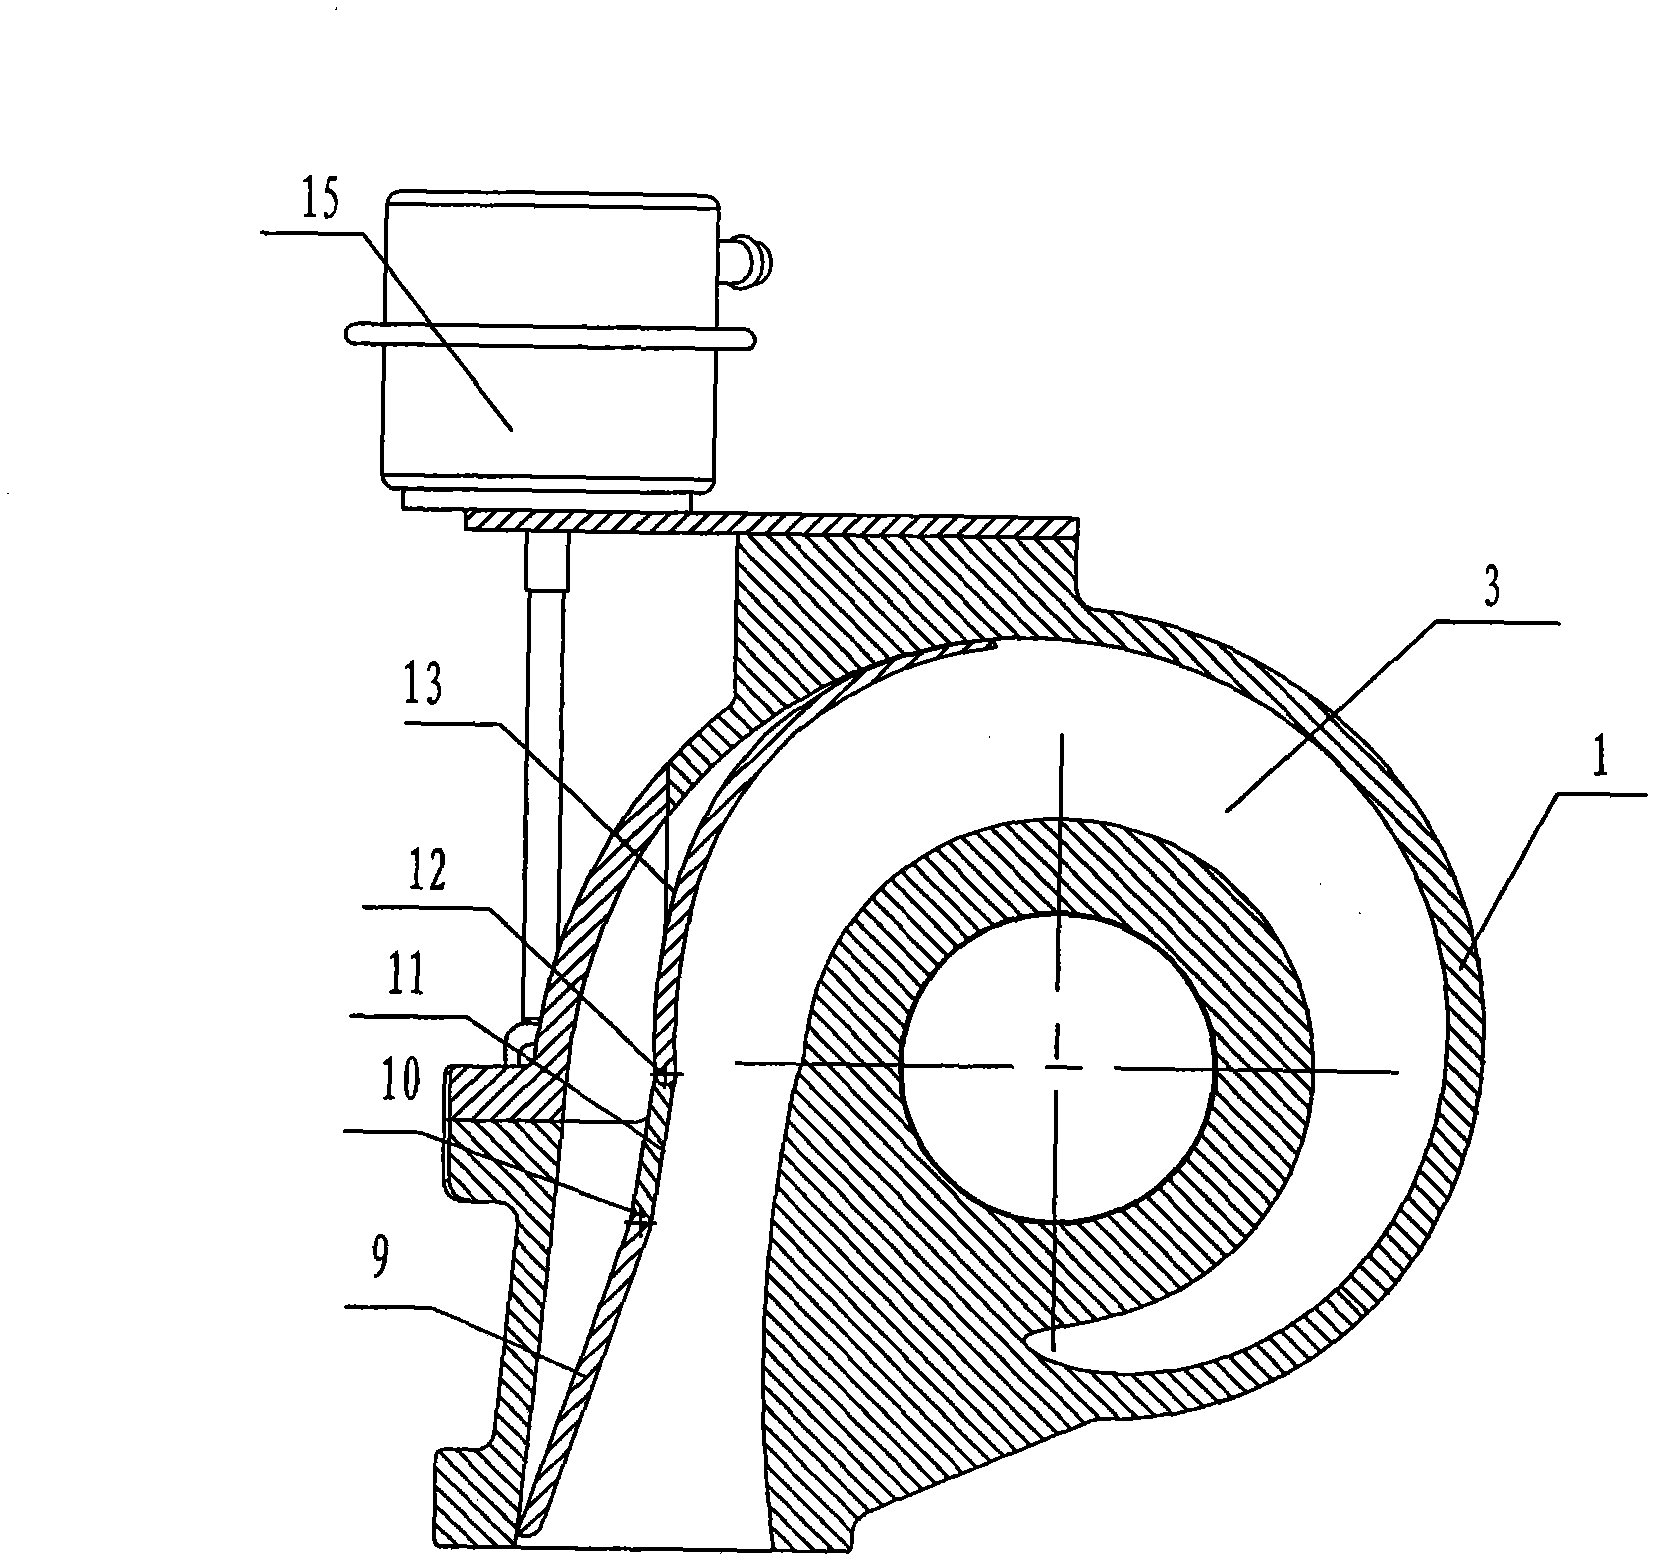 Section-variable turbine